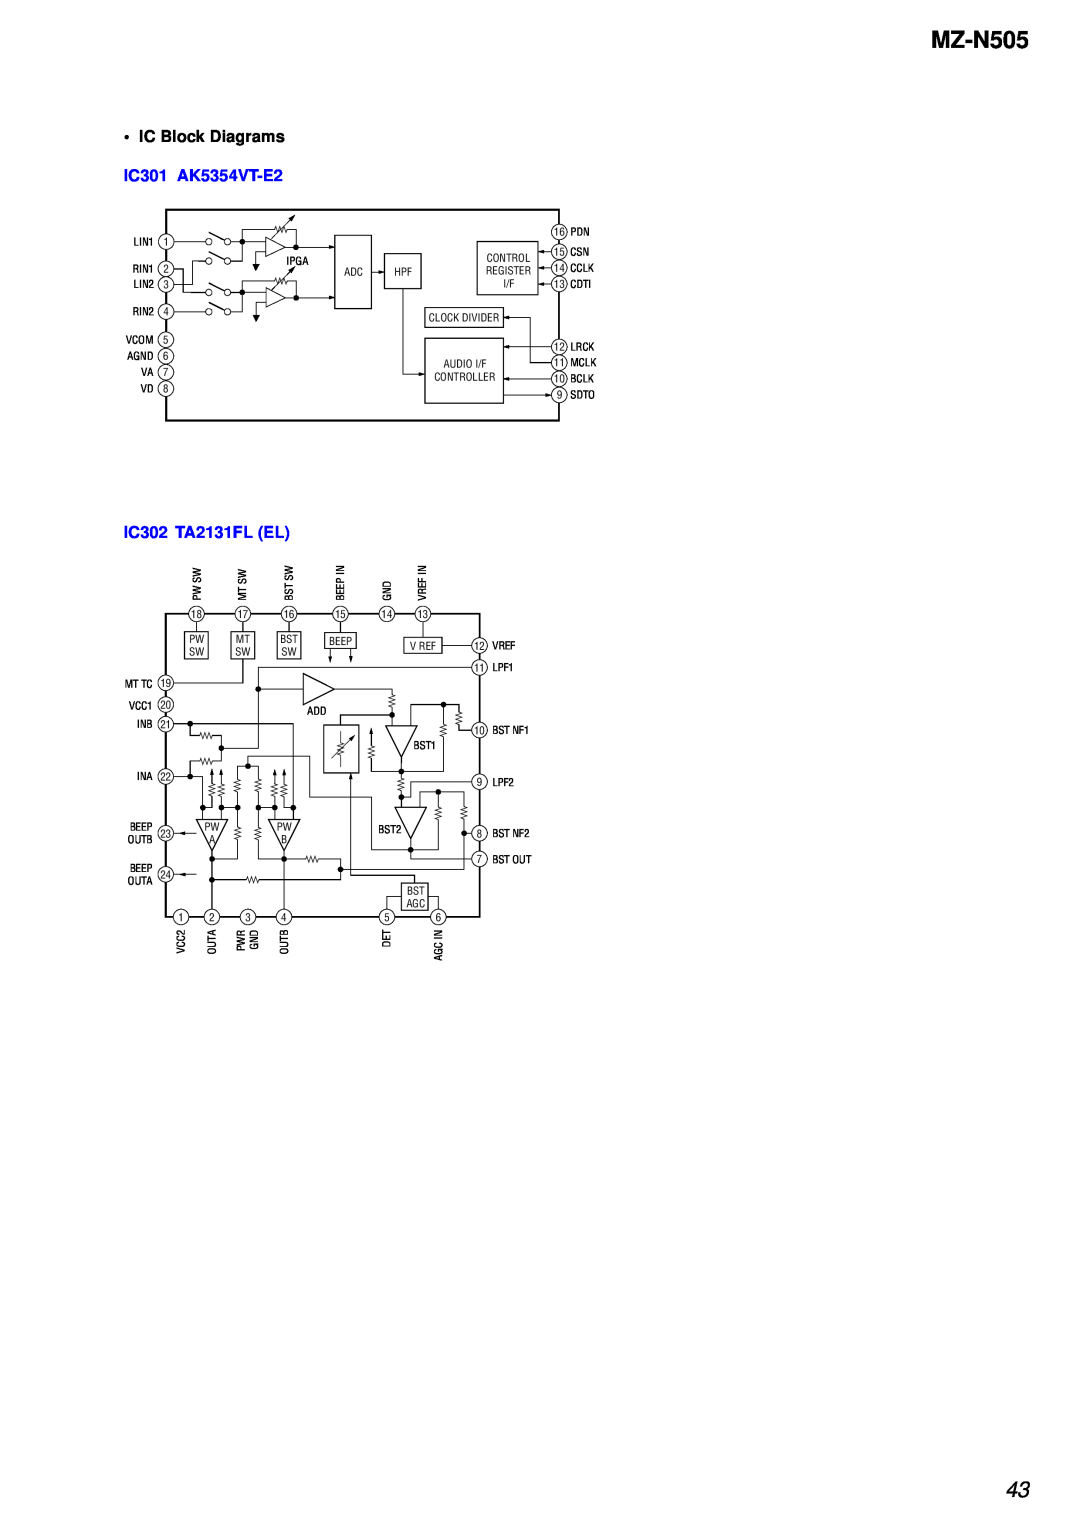 Sony MZ-N505 service manual IC Block Diagrams IC301 AK5354VT-E2, IC302 TA2131FL EL 